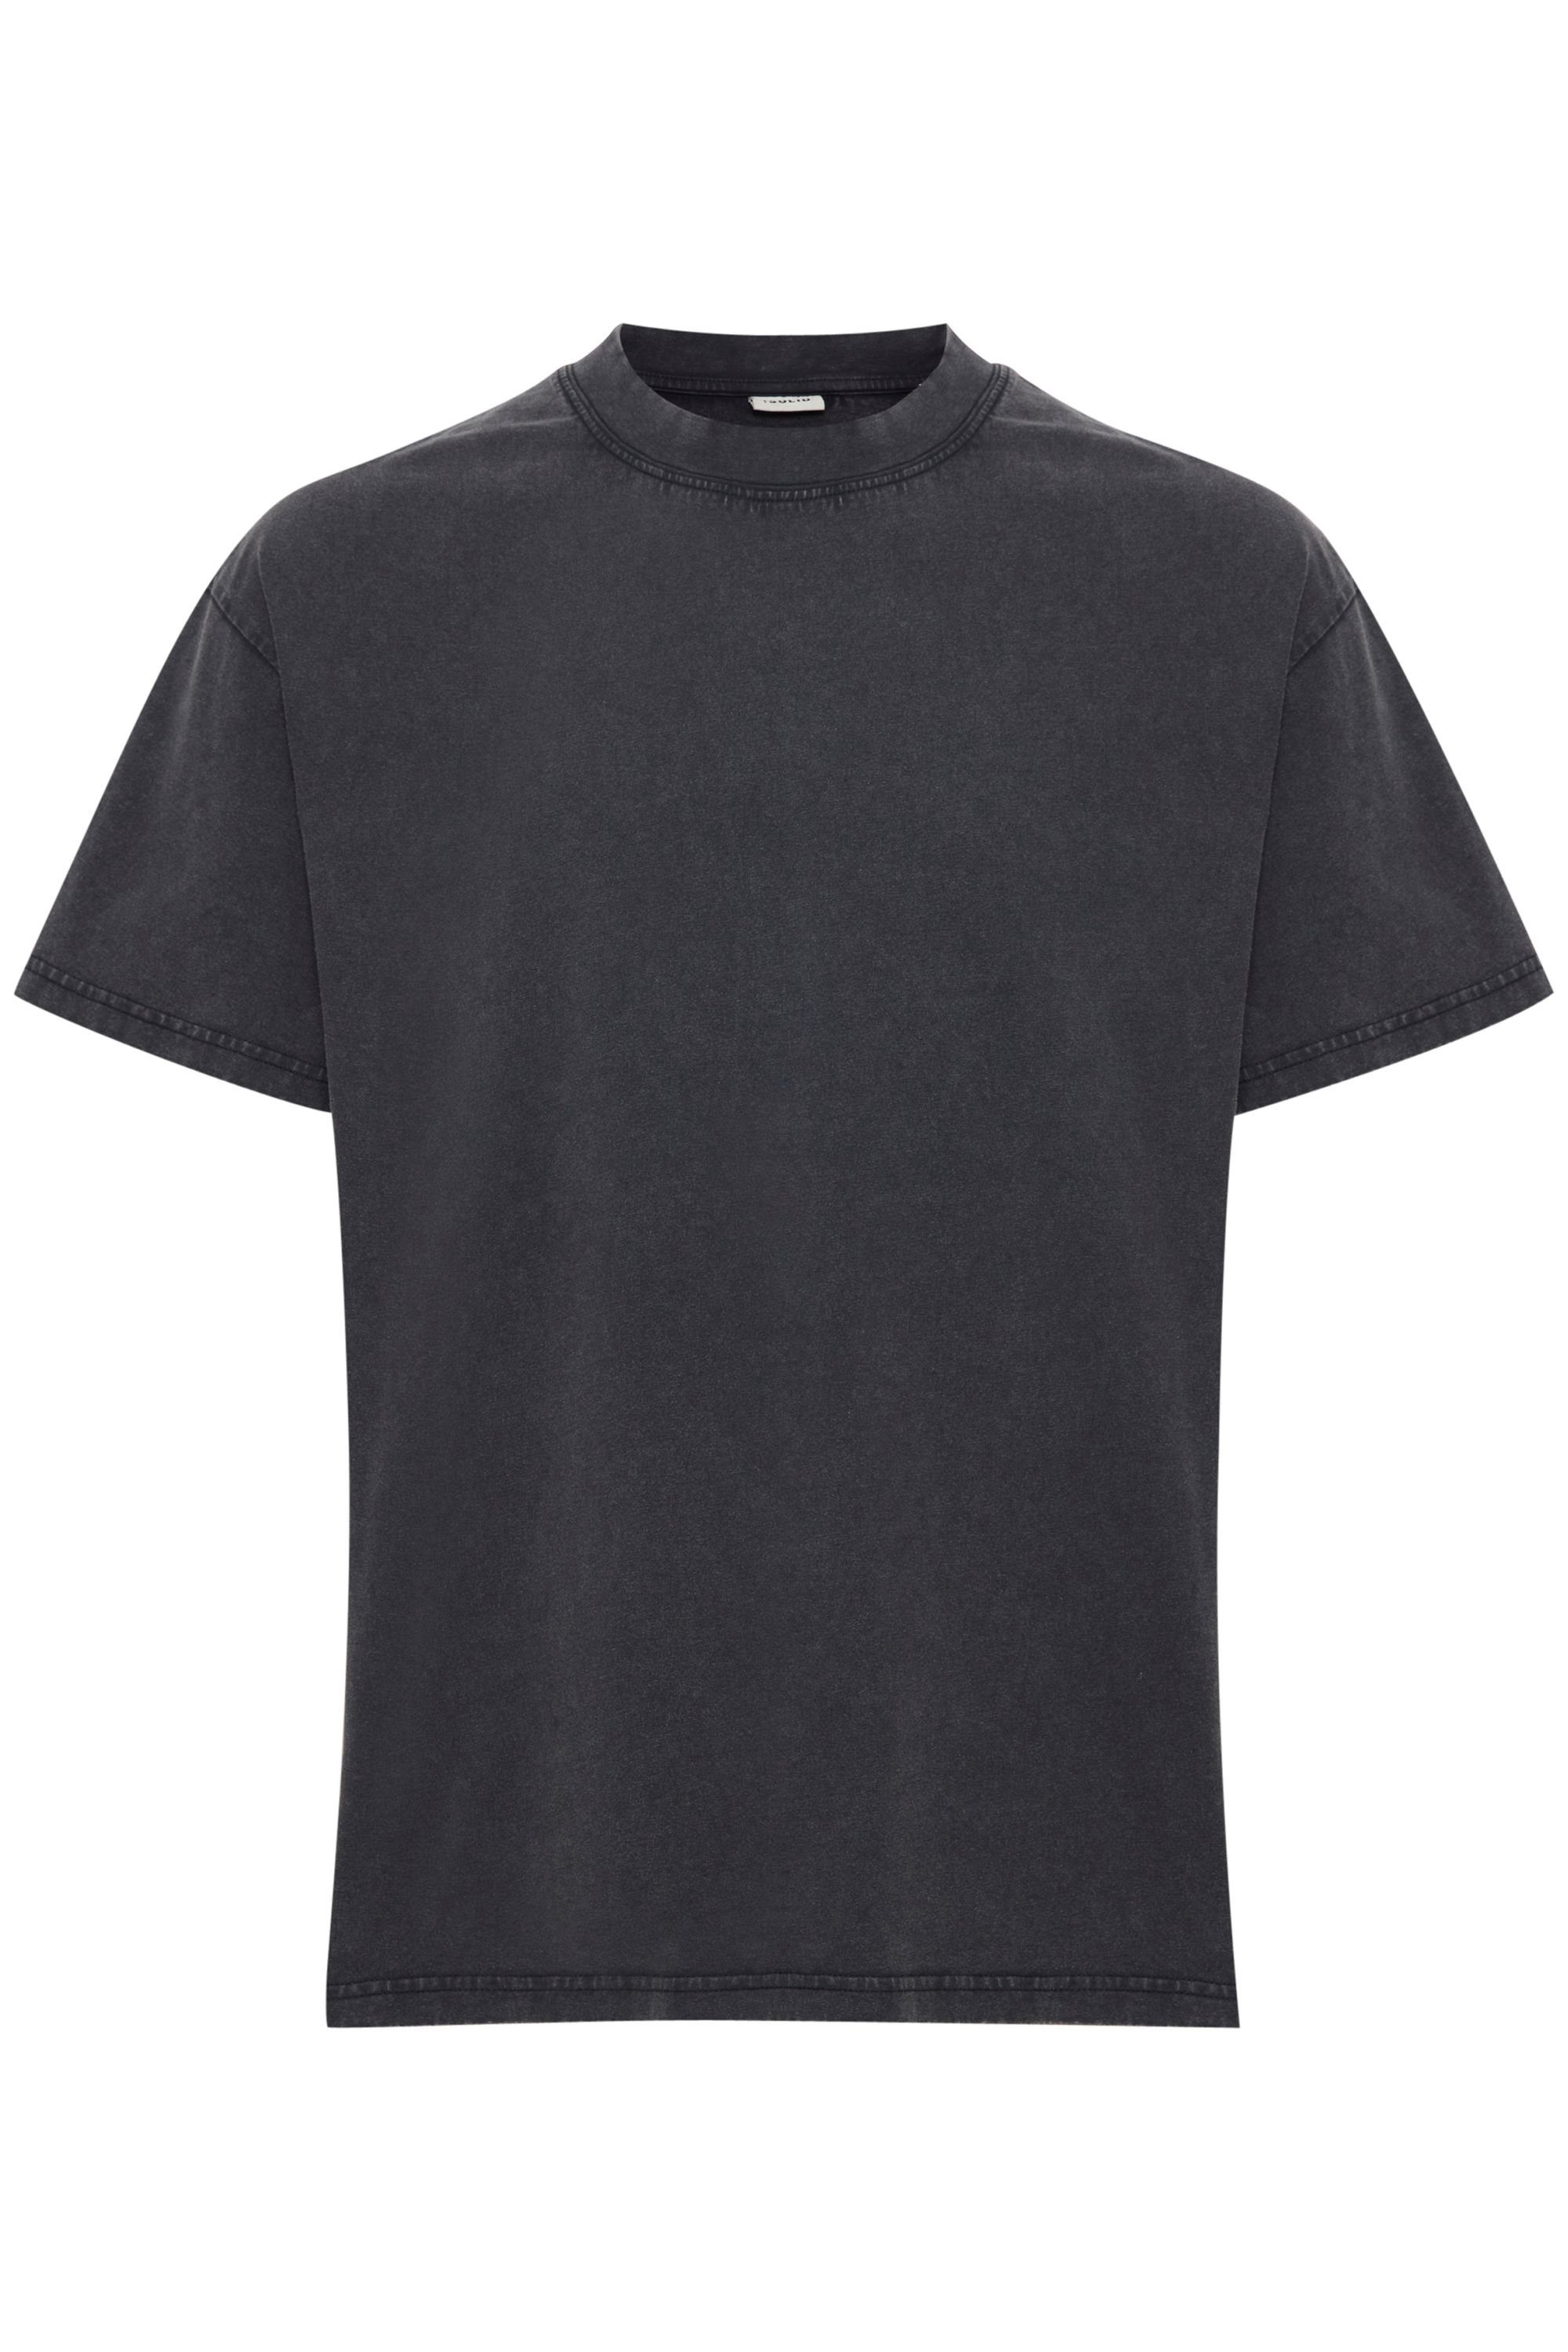 (194008) - 21107878 T-Shirt True !Solid SDGerlak Black